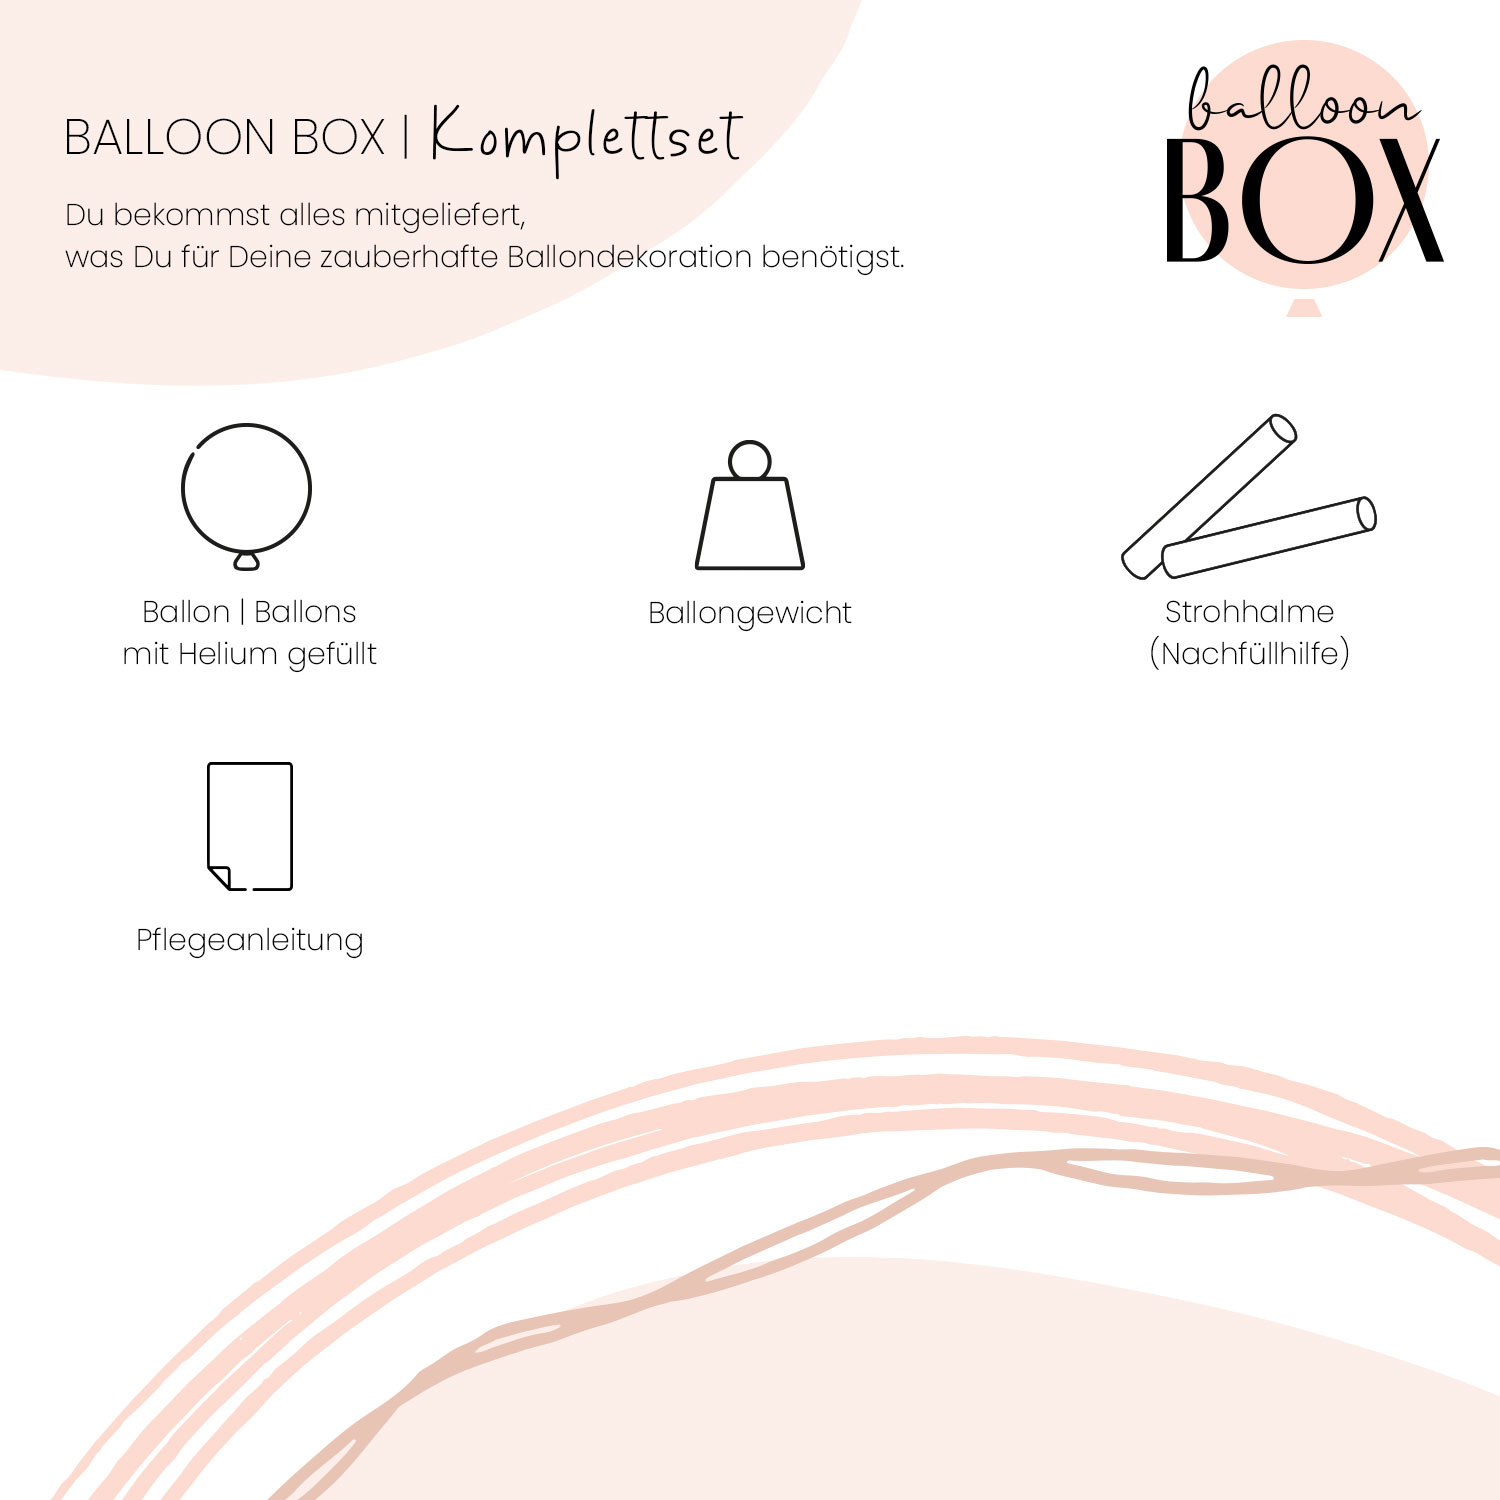 Heliumballon in a Box - MAMA Du bist die Beste